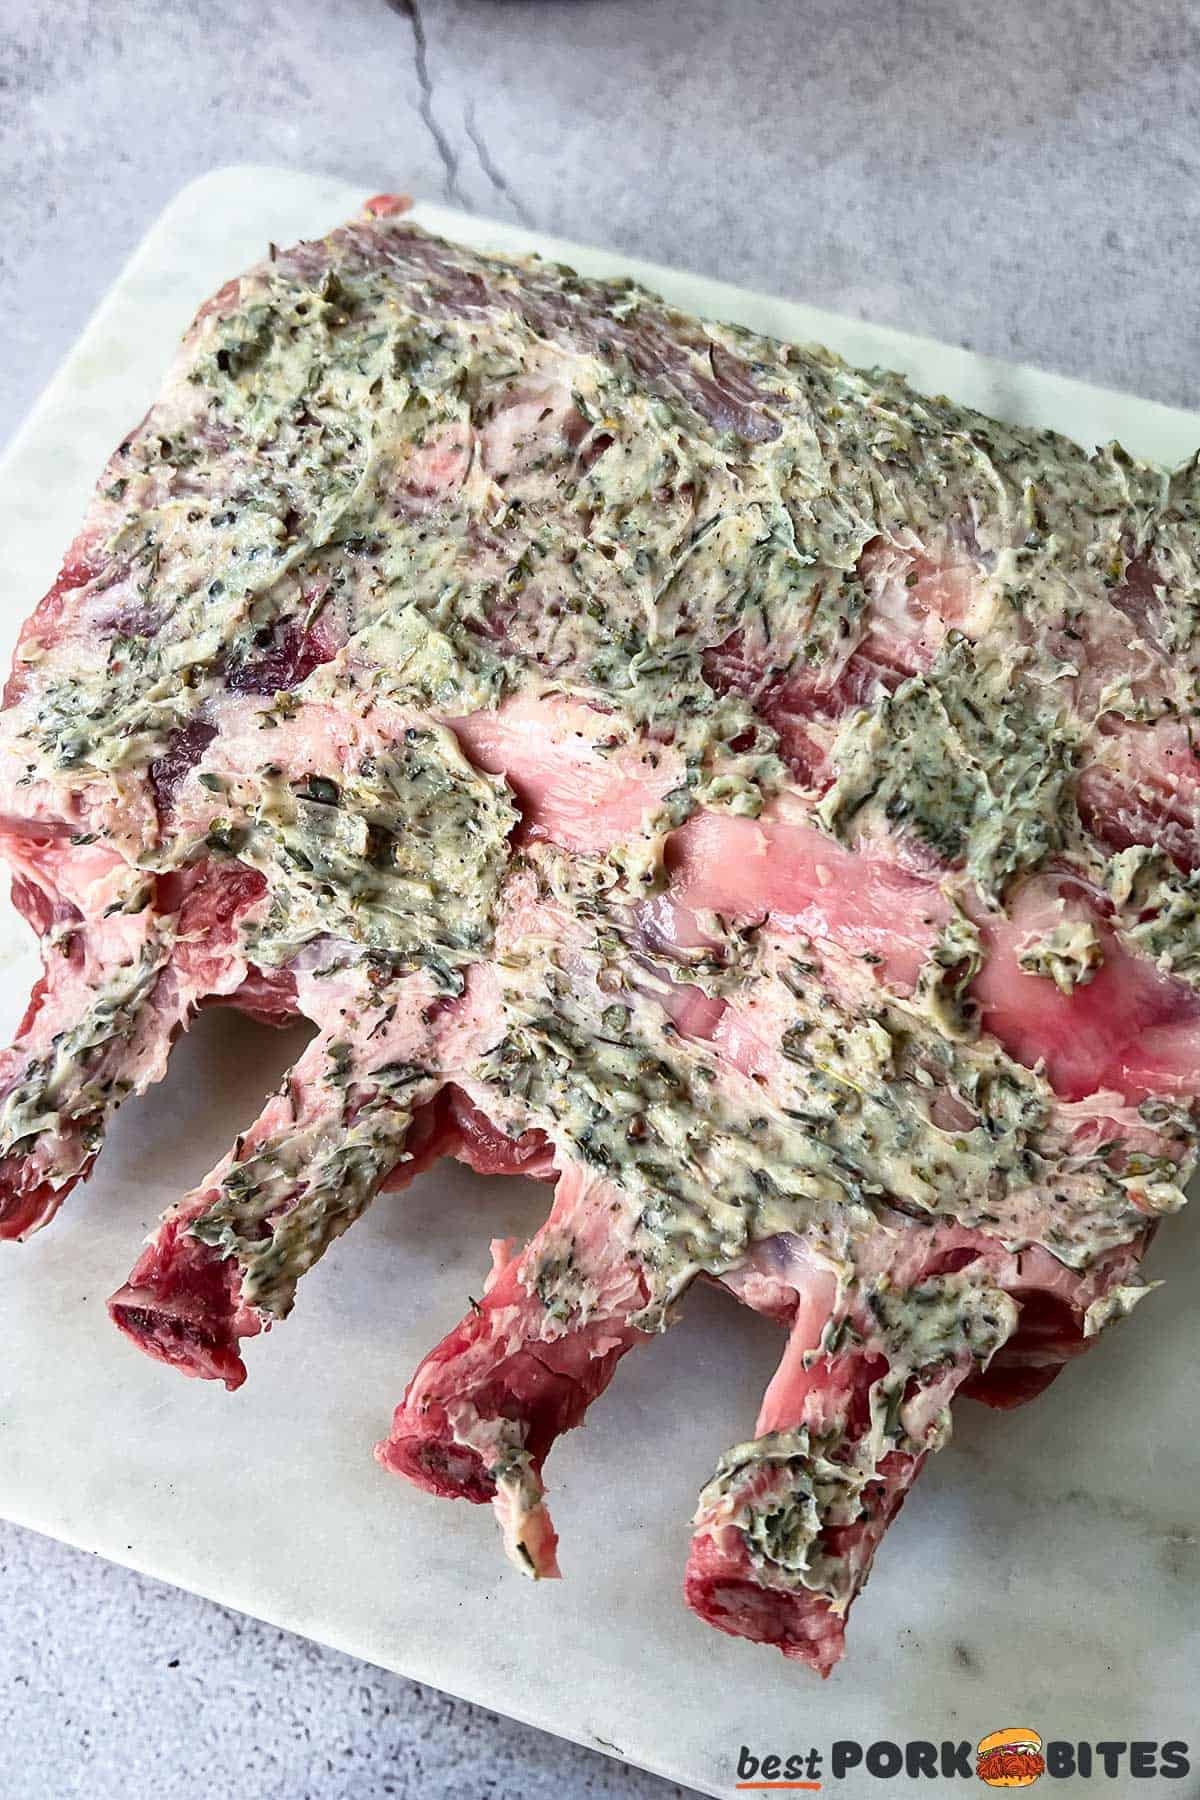 raw pork ribs coated in pork seasoning on a marble cutting board